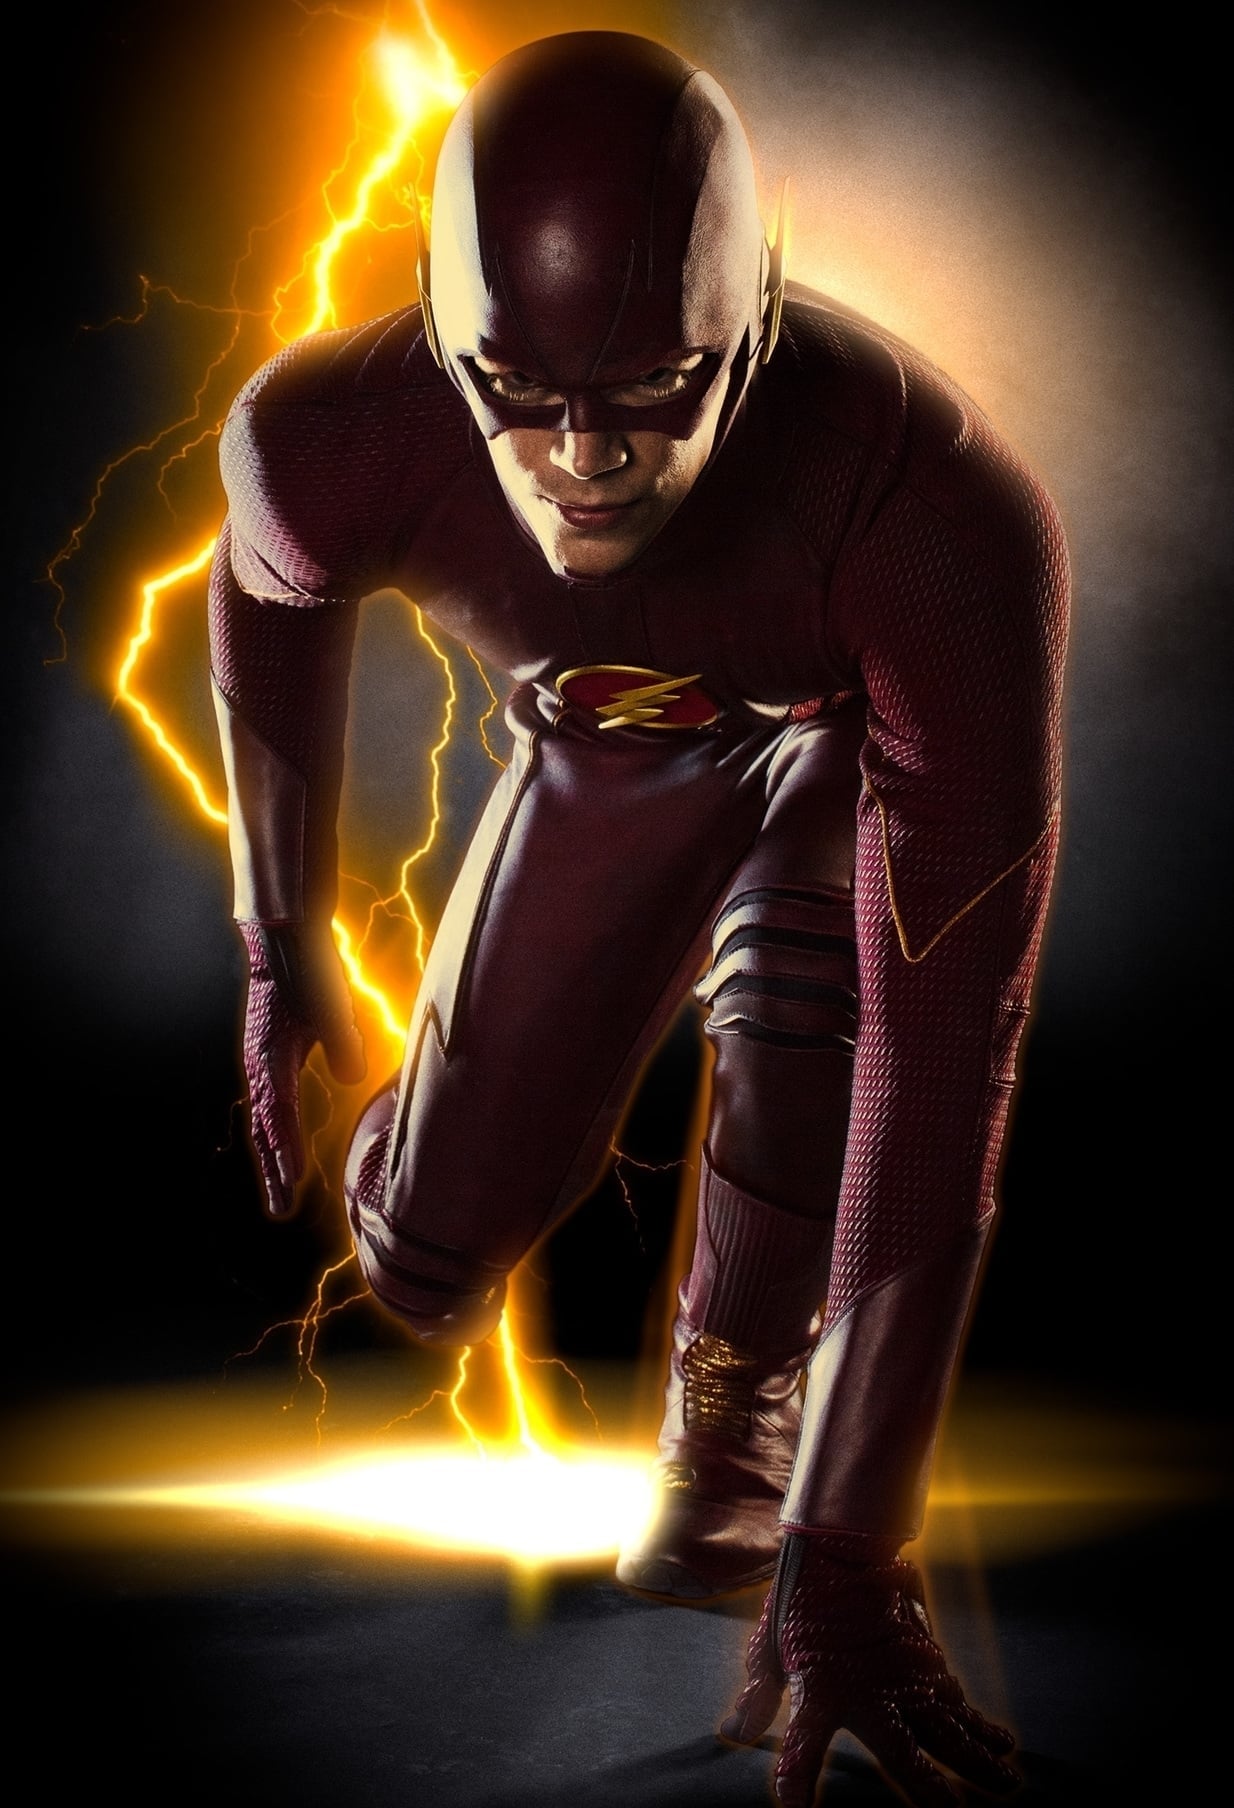 The Flash (TV Series 2014- ) - Posters — The Movie Database (TMDb)